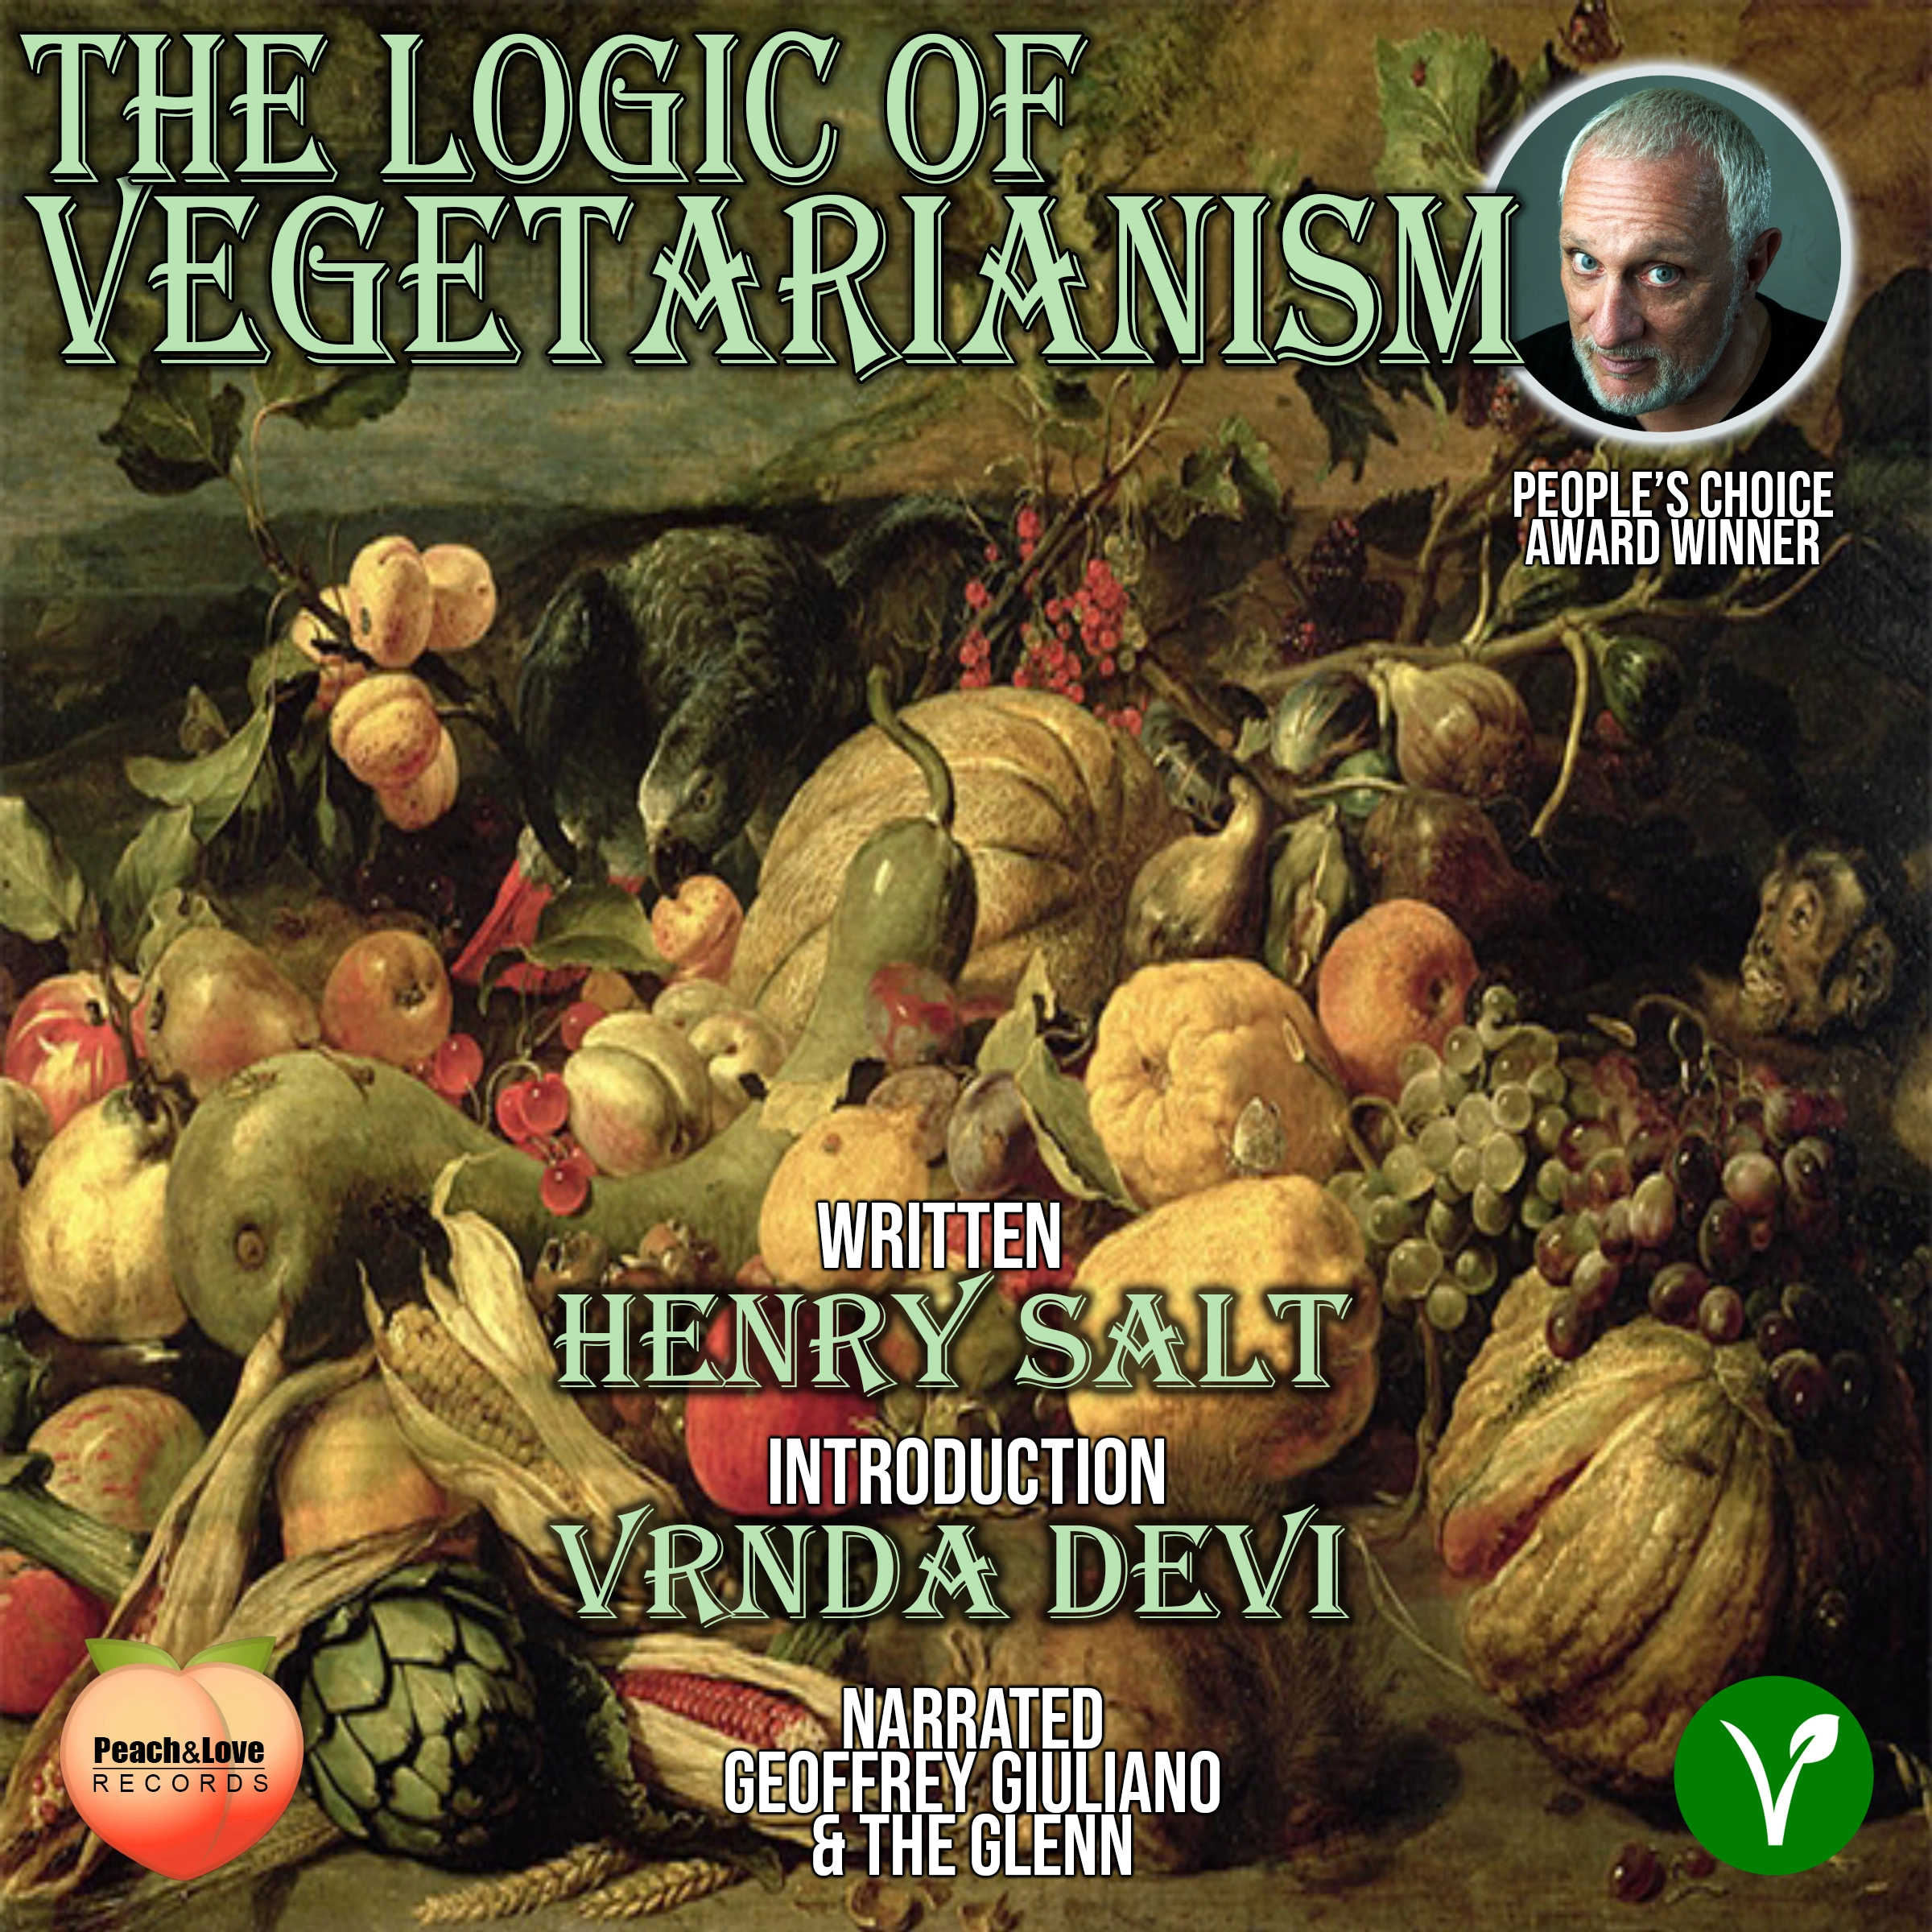 The Logic Of Vegetarianism by Henry Salt Audiobook